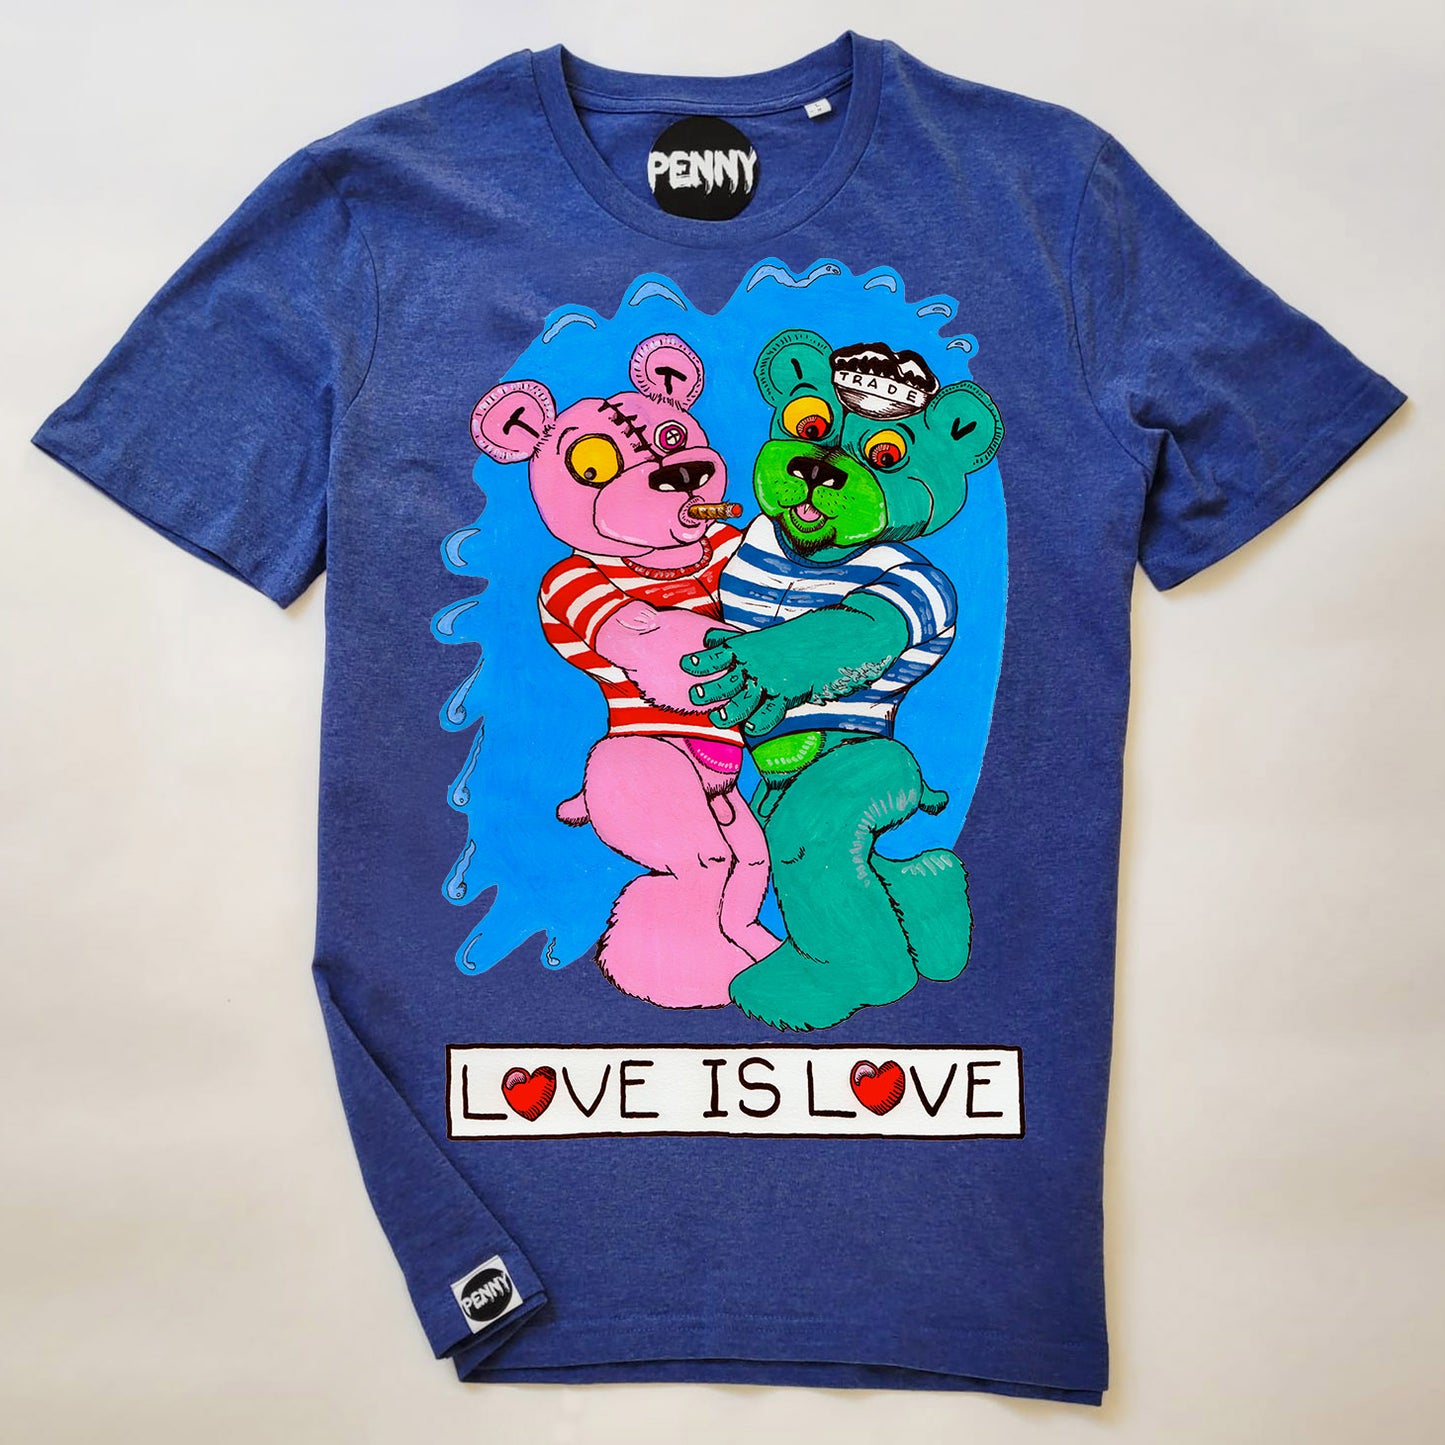 Erik and Oscar Love is Love T-shirt